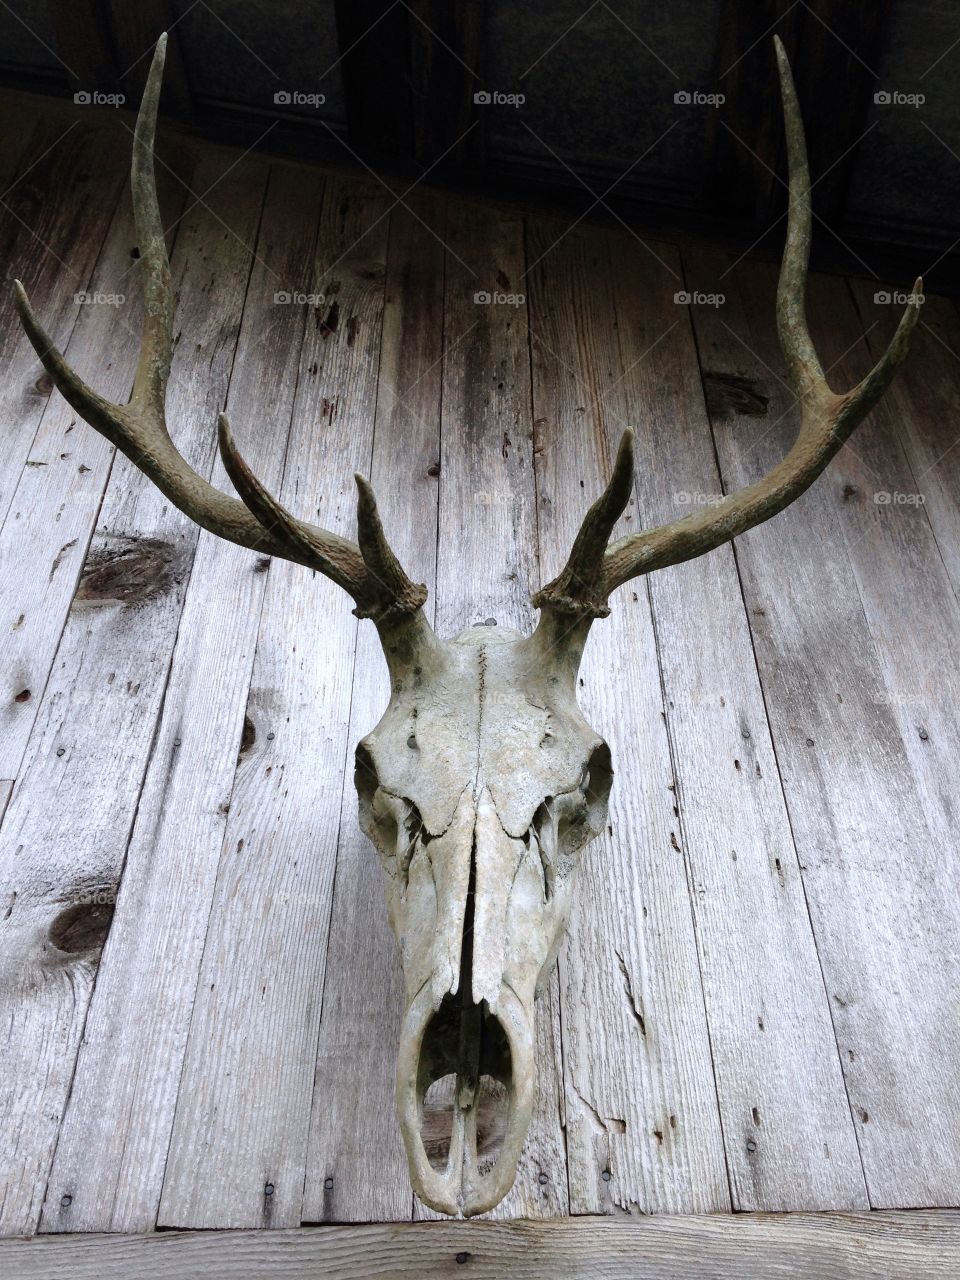 The old elk skull guarding the barn. 